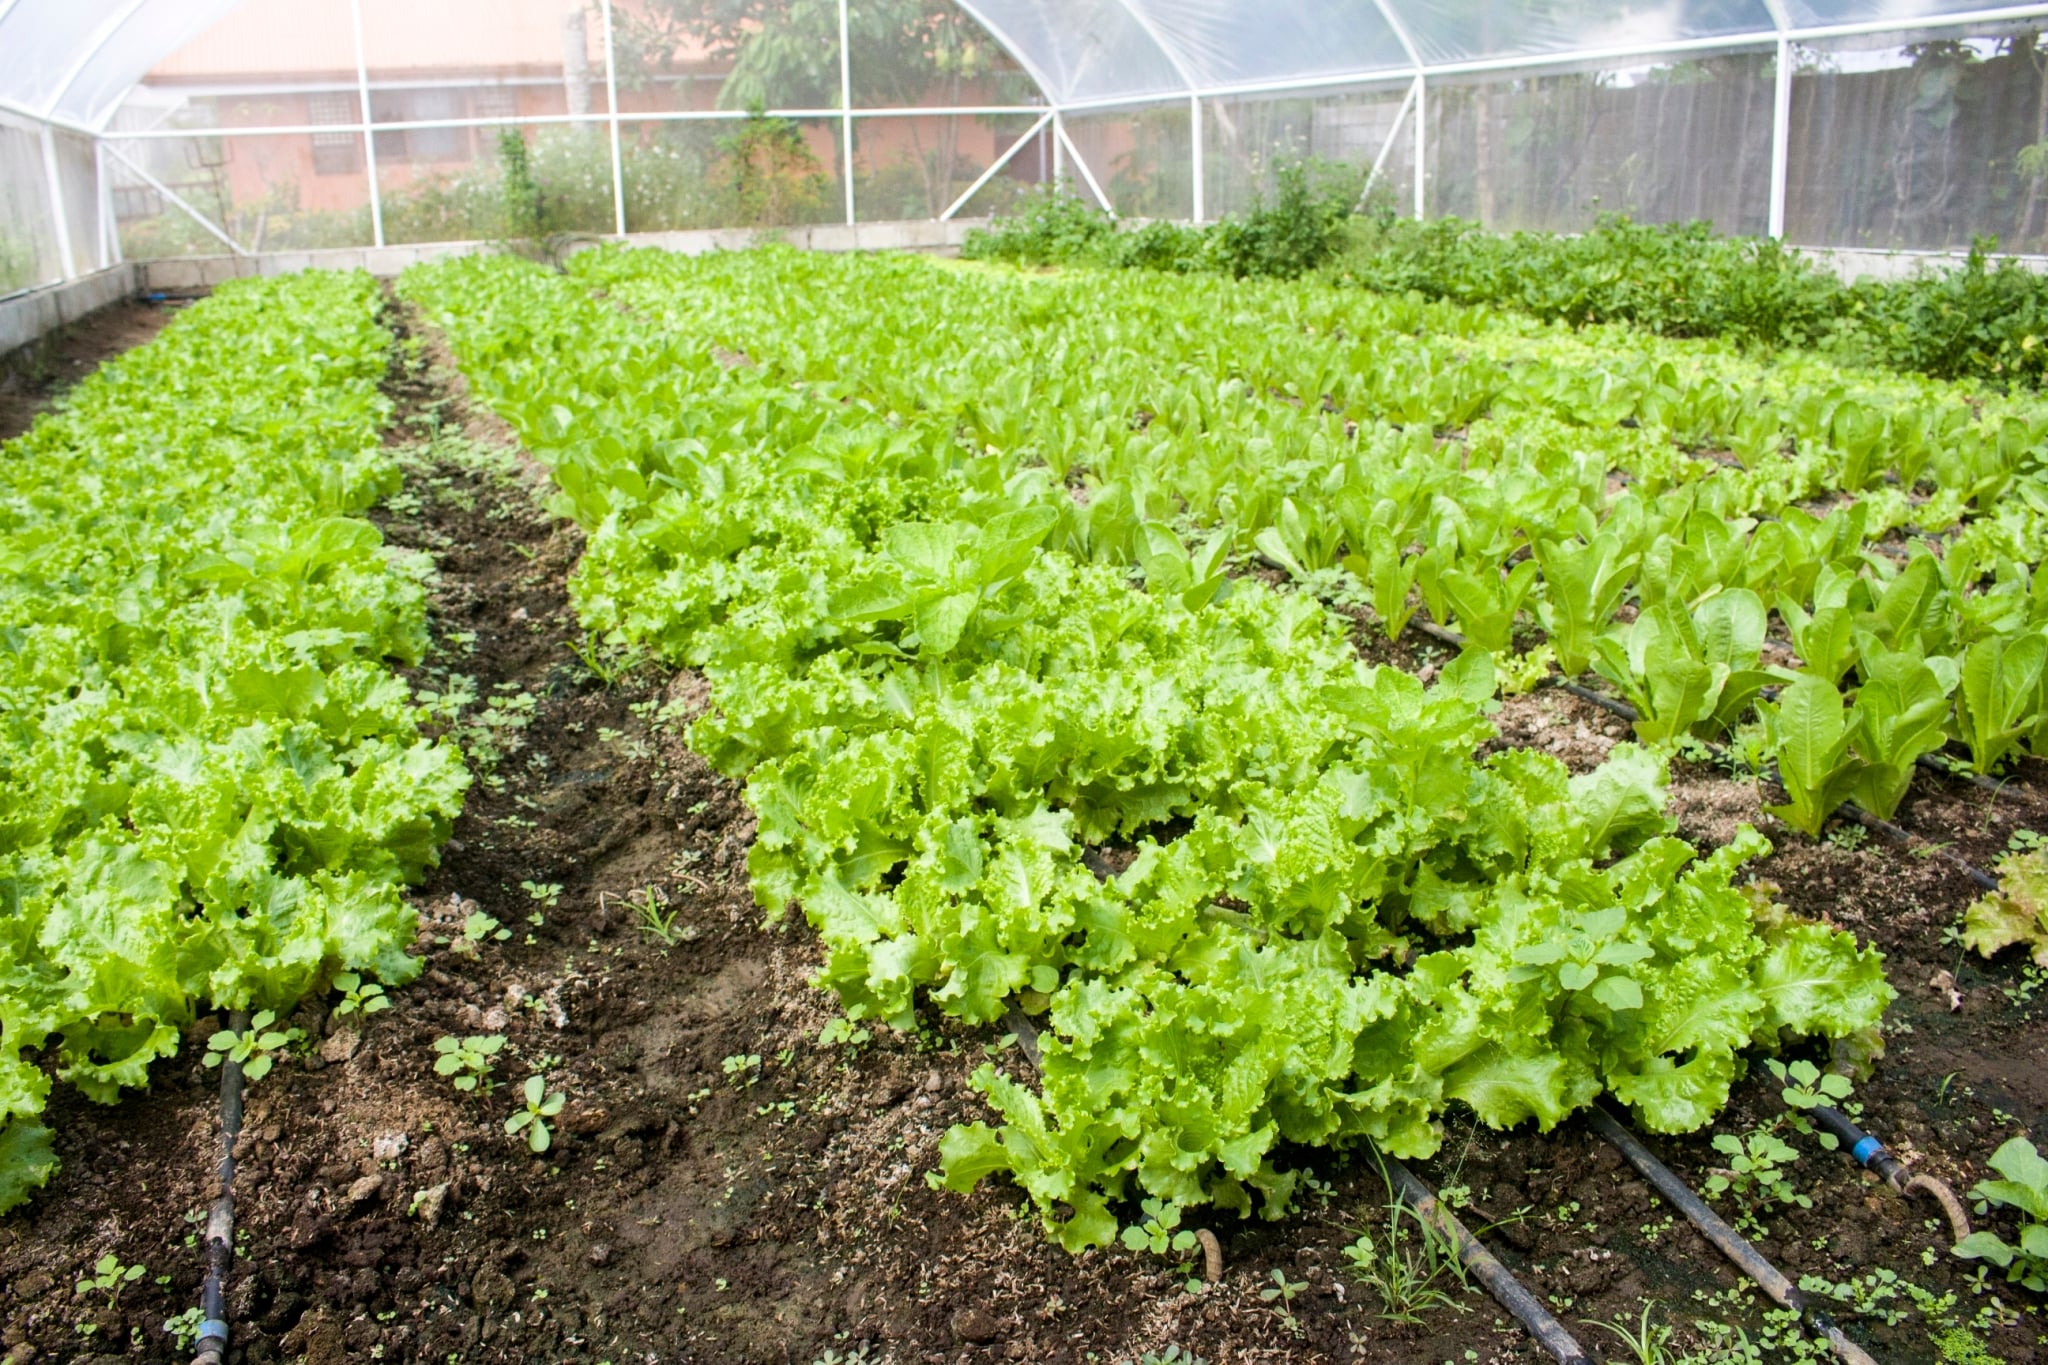 Rows of lettuce ready for harvest.【Photo by Matt Serrano】